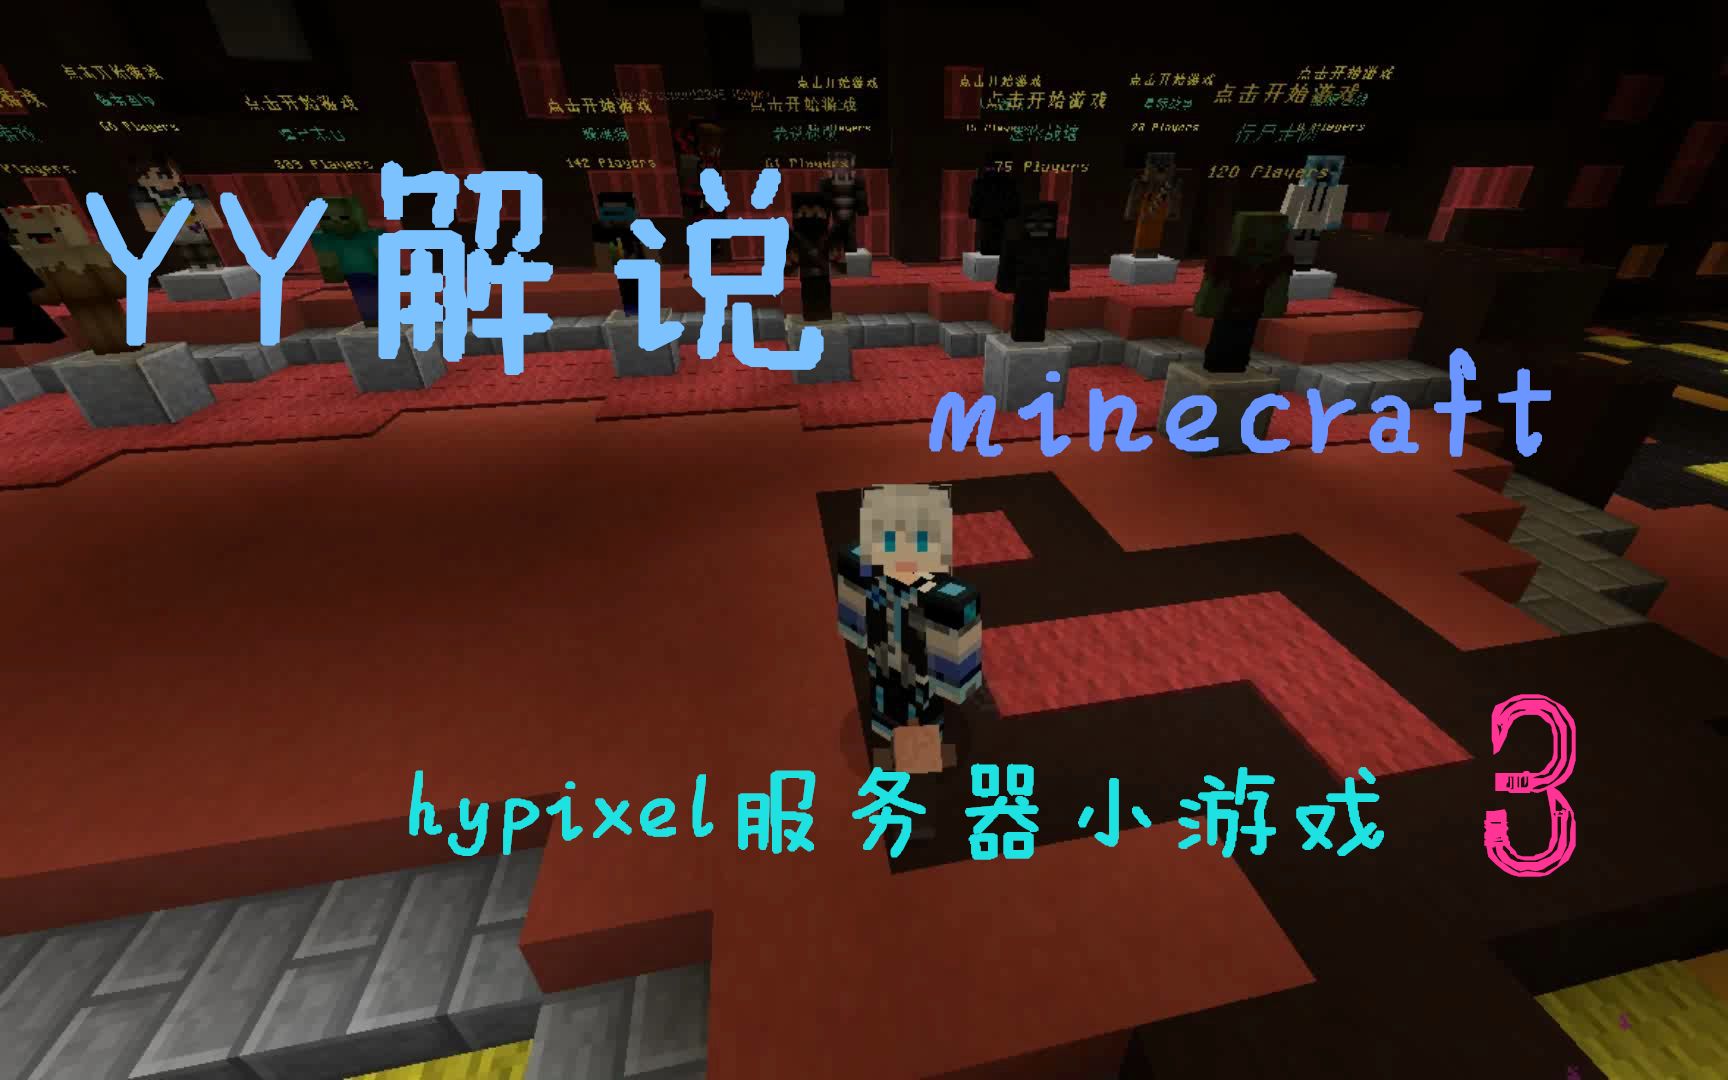 Yy解说 Minecraft我的世界hypixel小游戏第三集 哔哩哔哩 つロ干杯 Bilibili